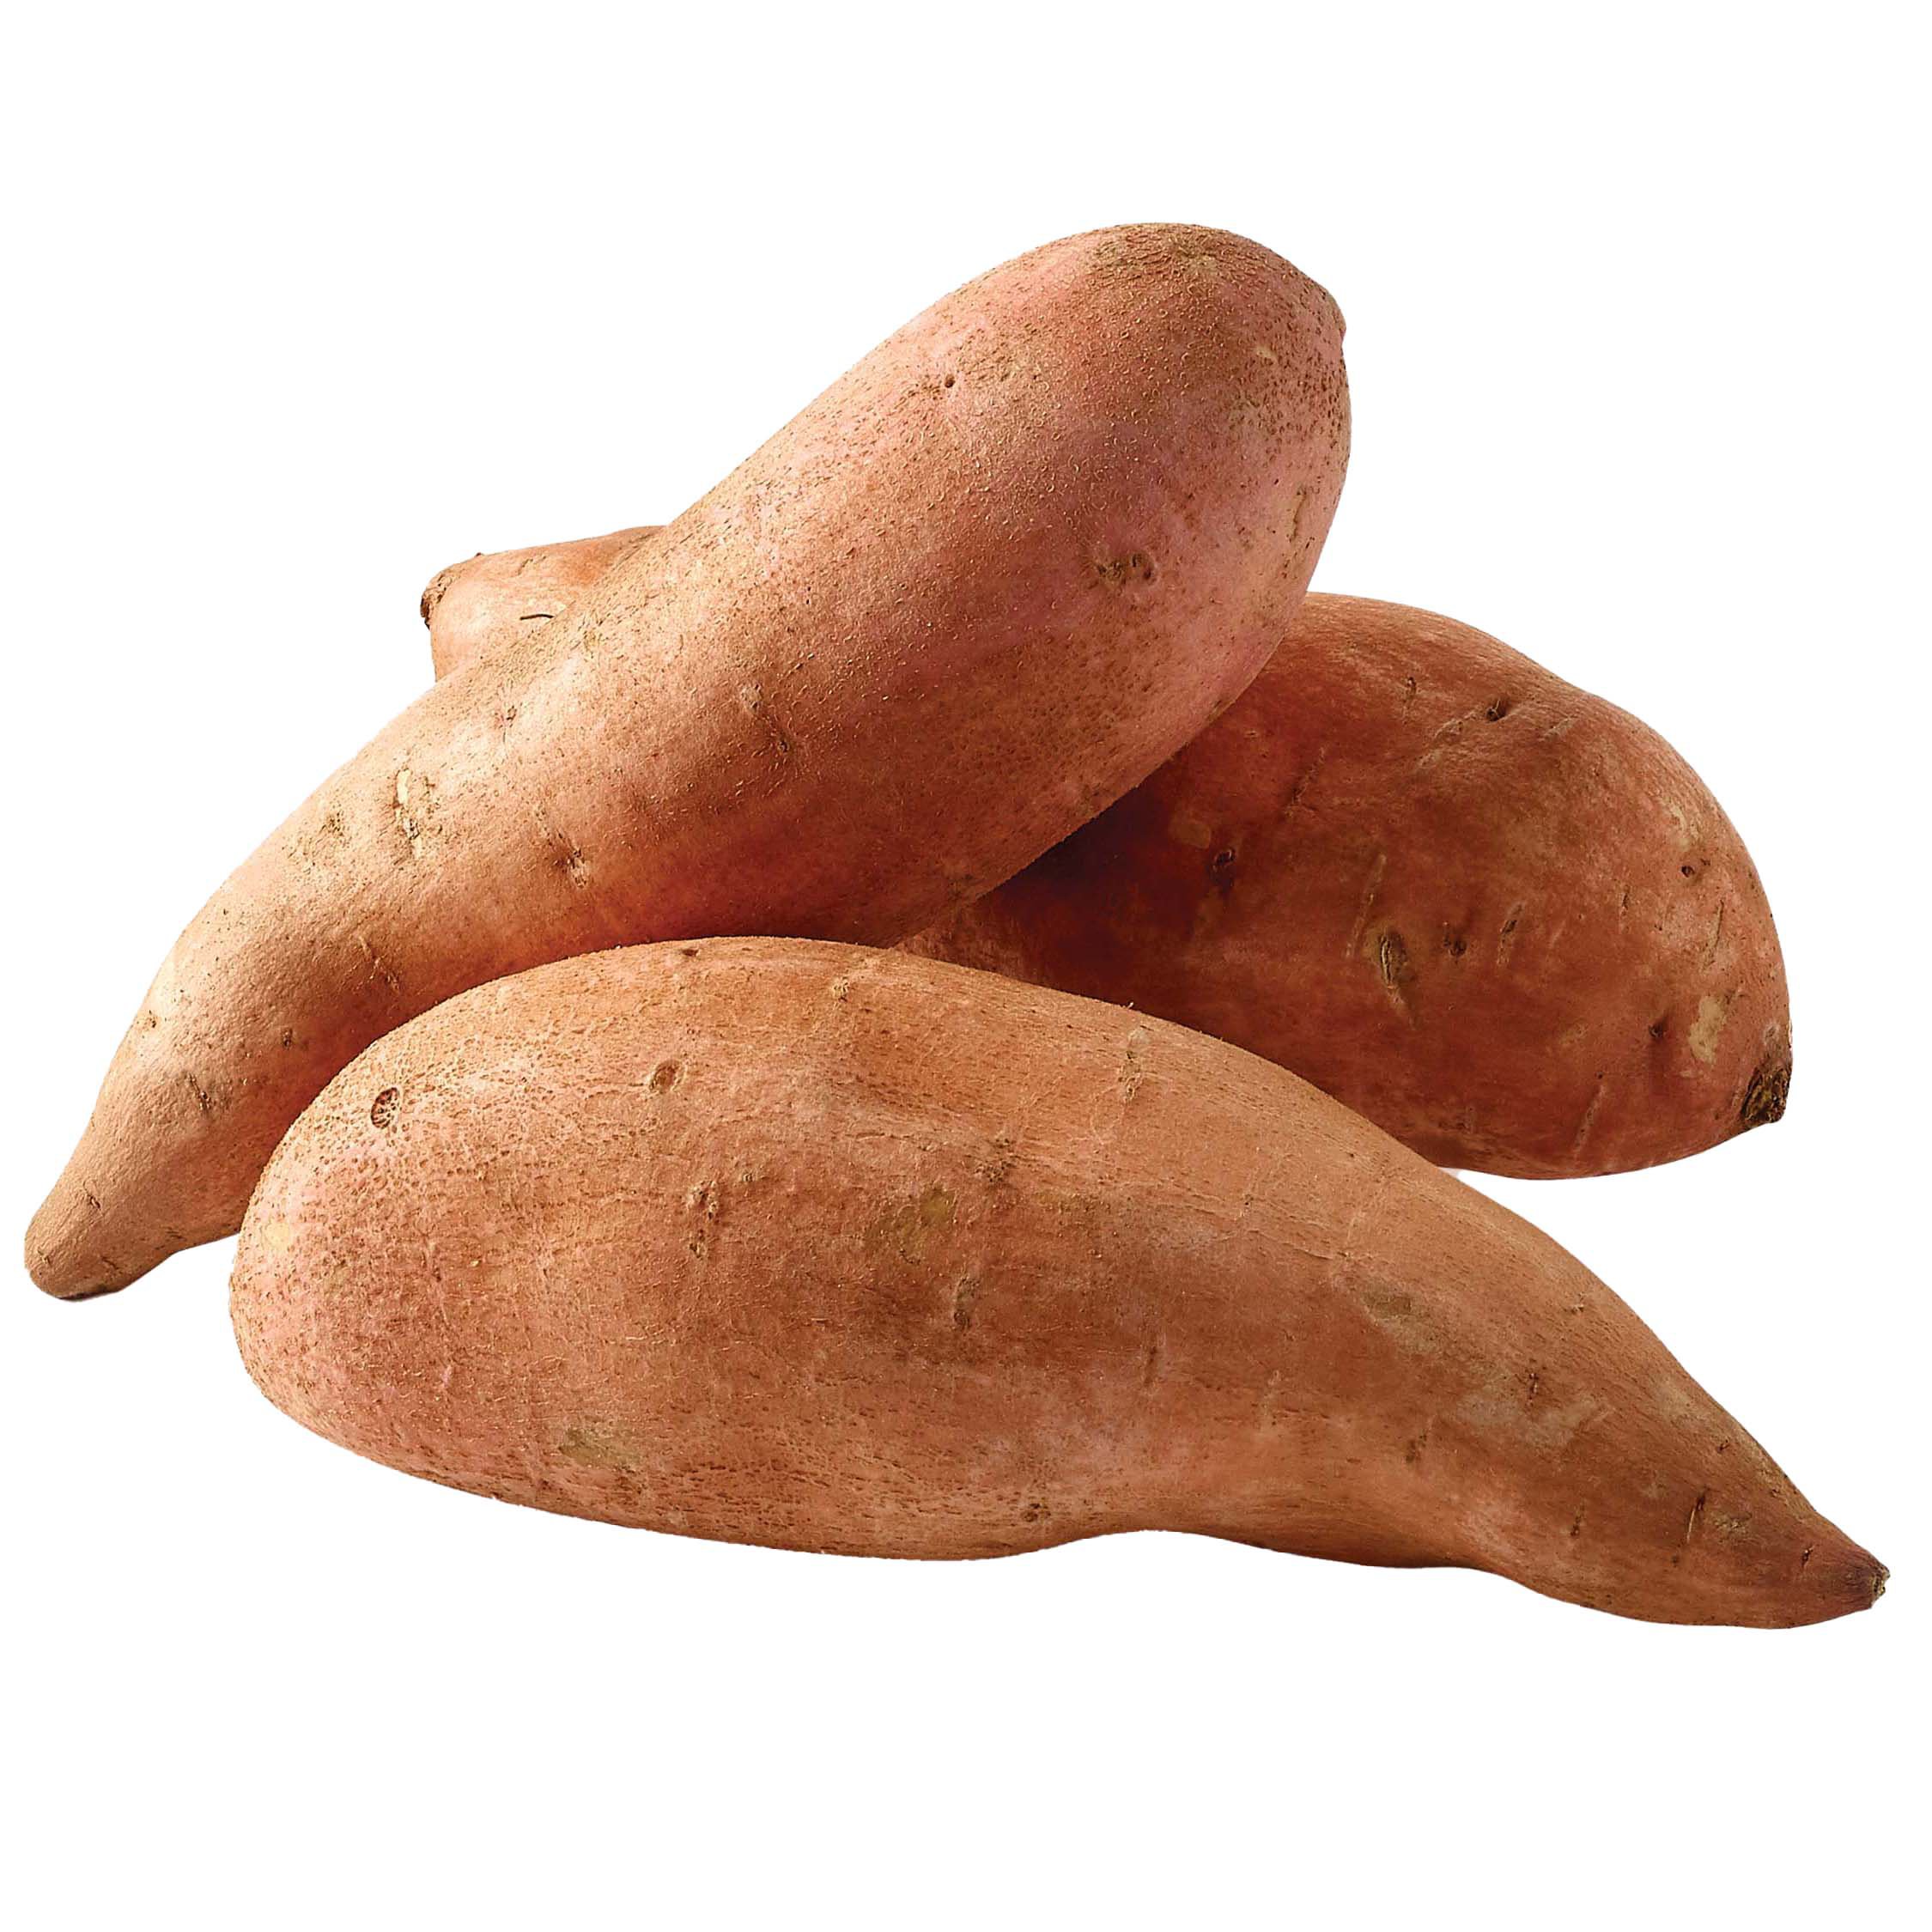 Fresh Sweet Potatoes 10 lb